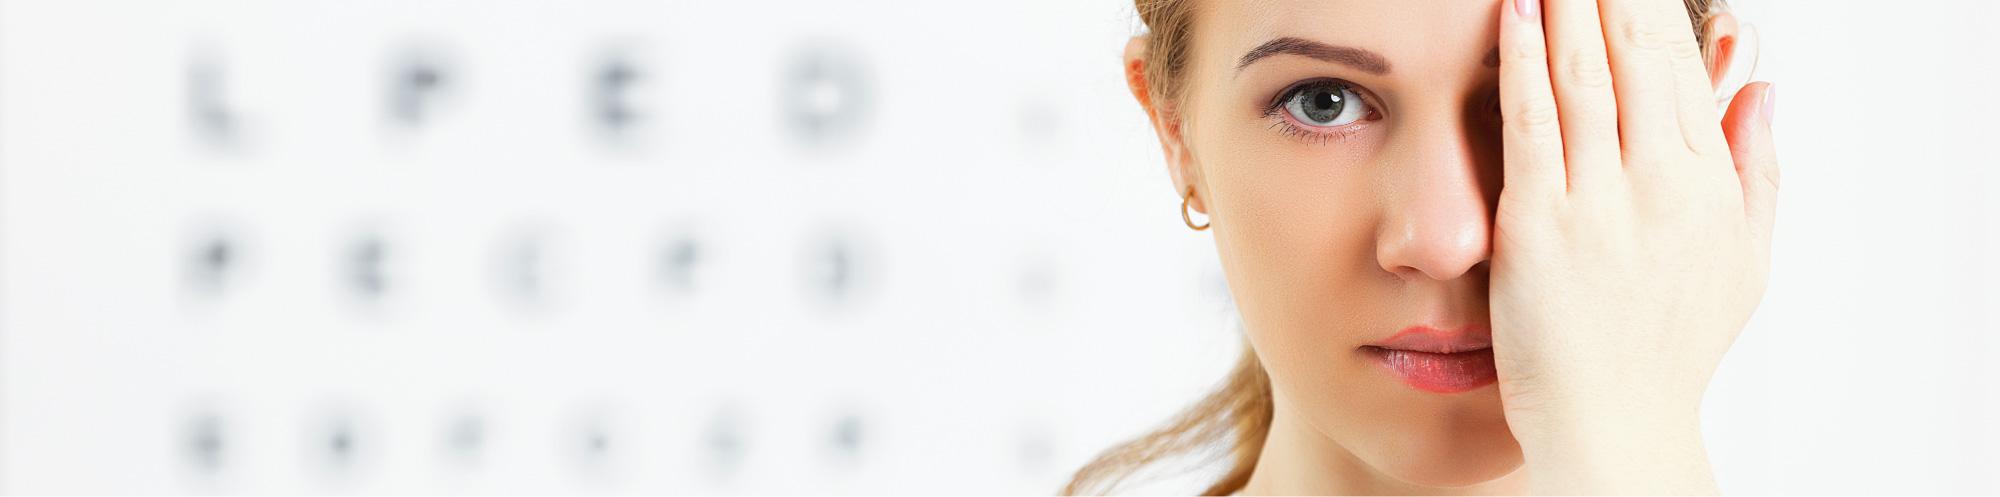 Kontaktformular - Augenarztpraxis Buchen